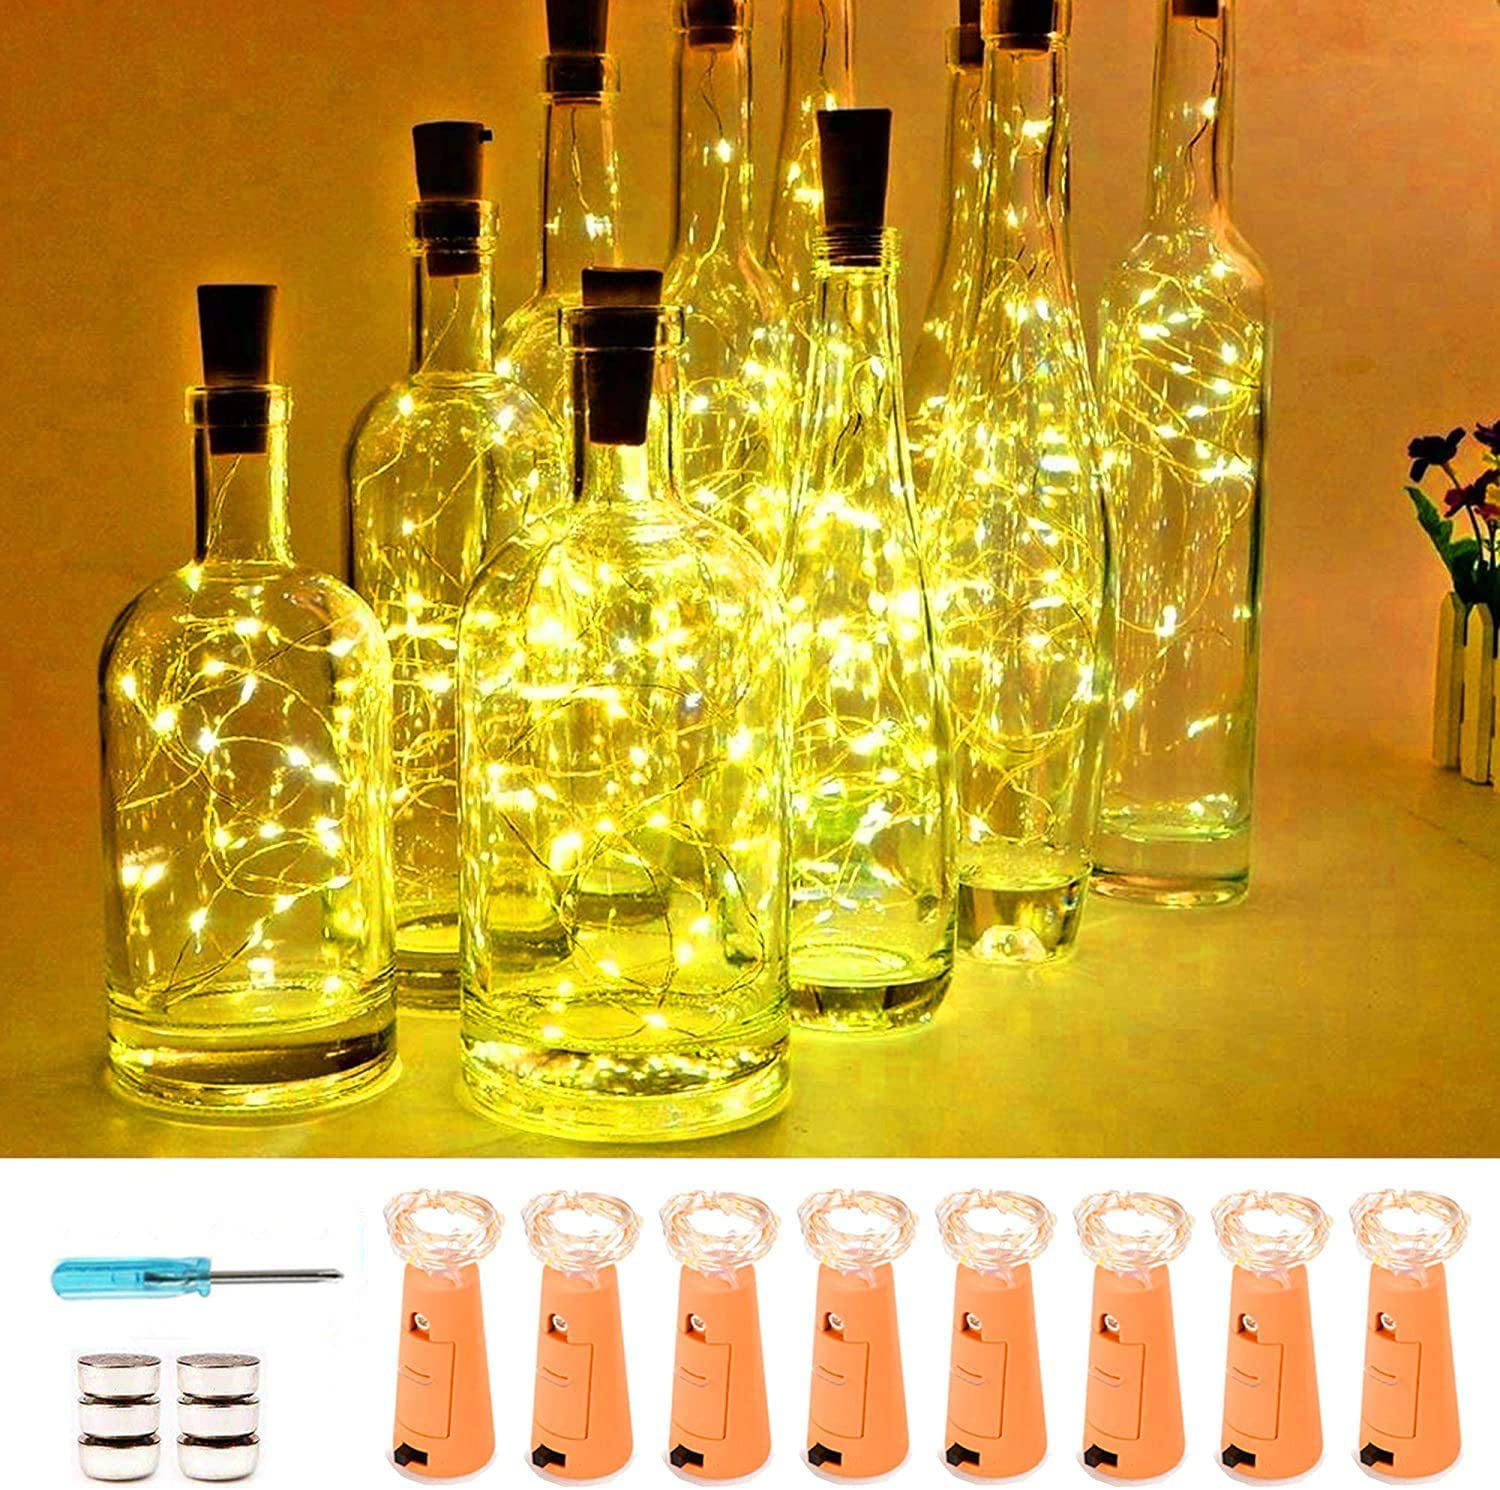 Copper Bottle String Lights Light 15 LED Warm Cool White Fairy Wine Cork Shaped 